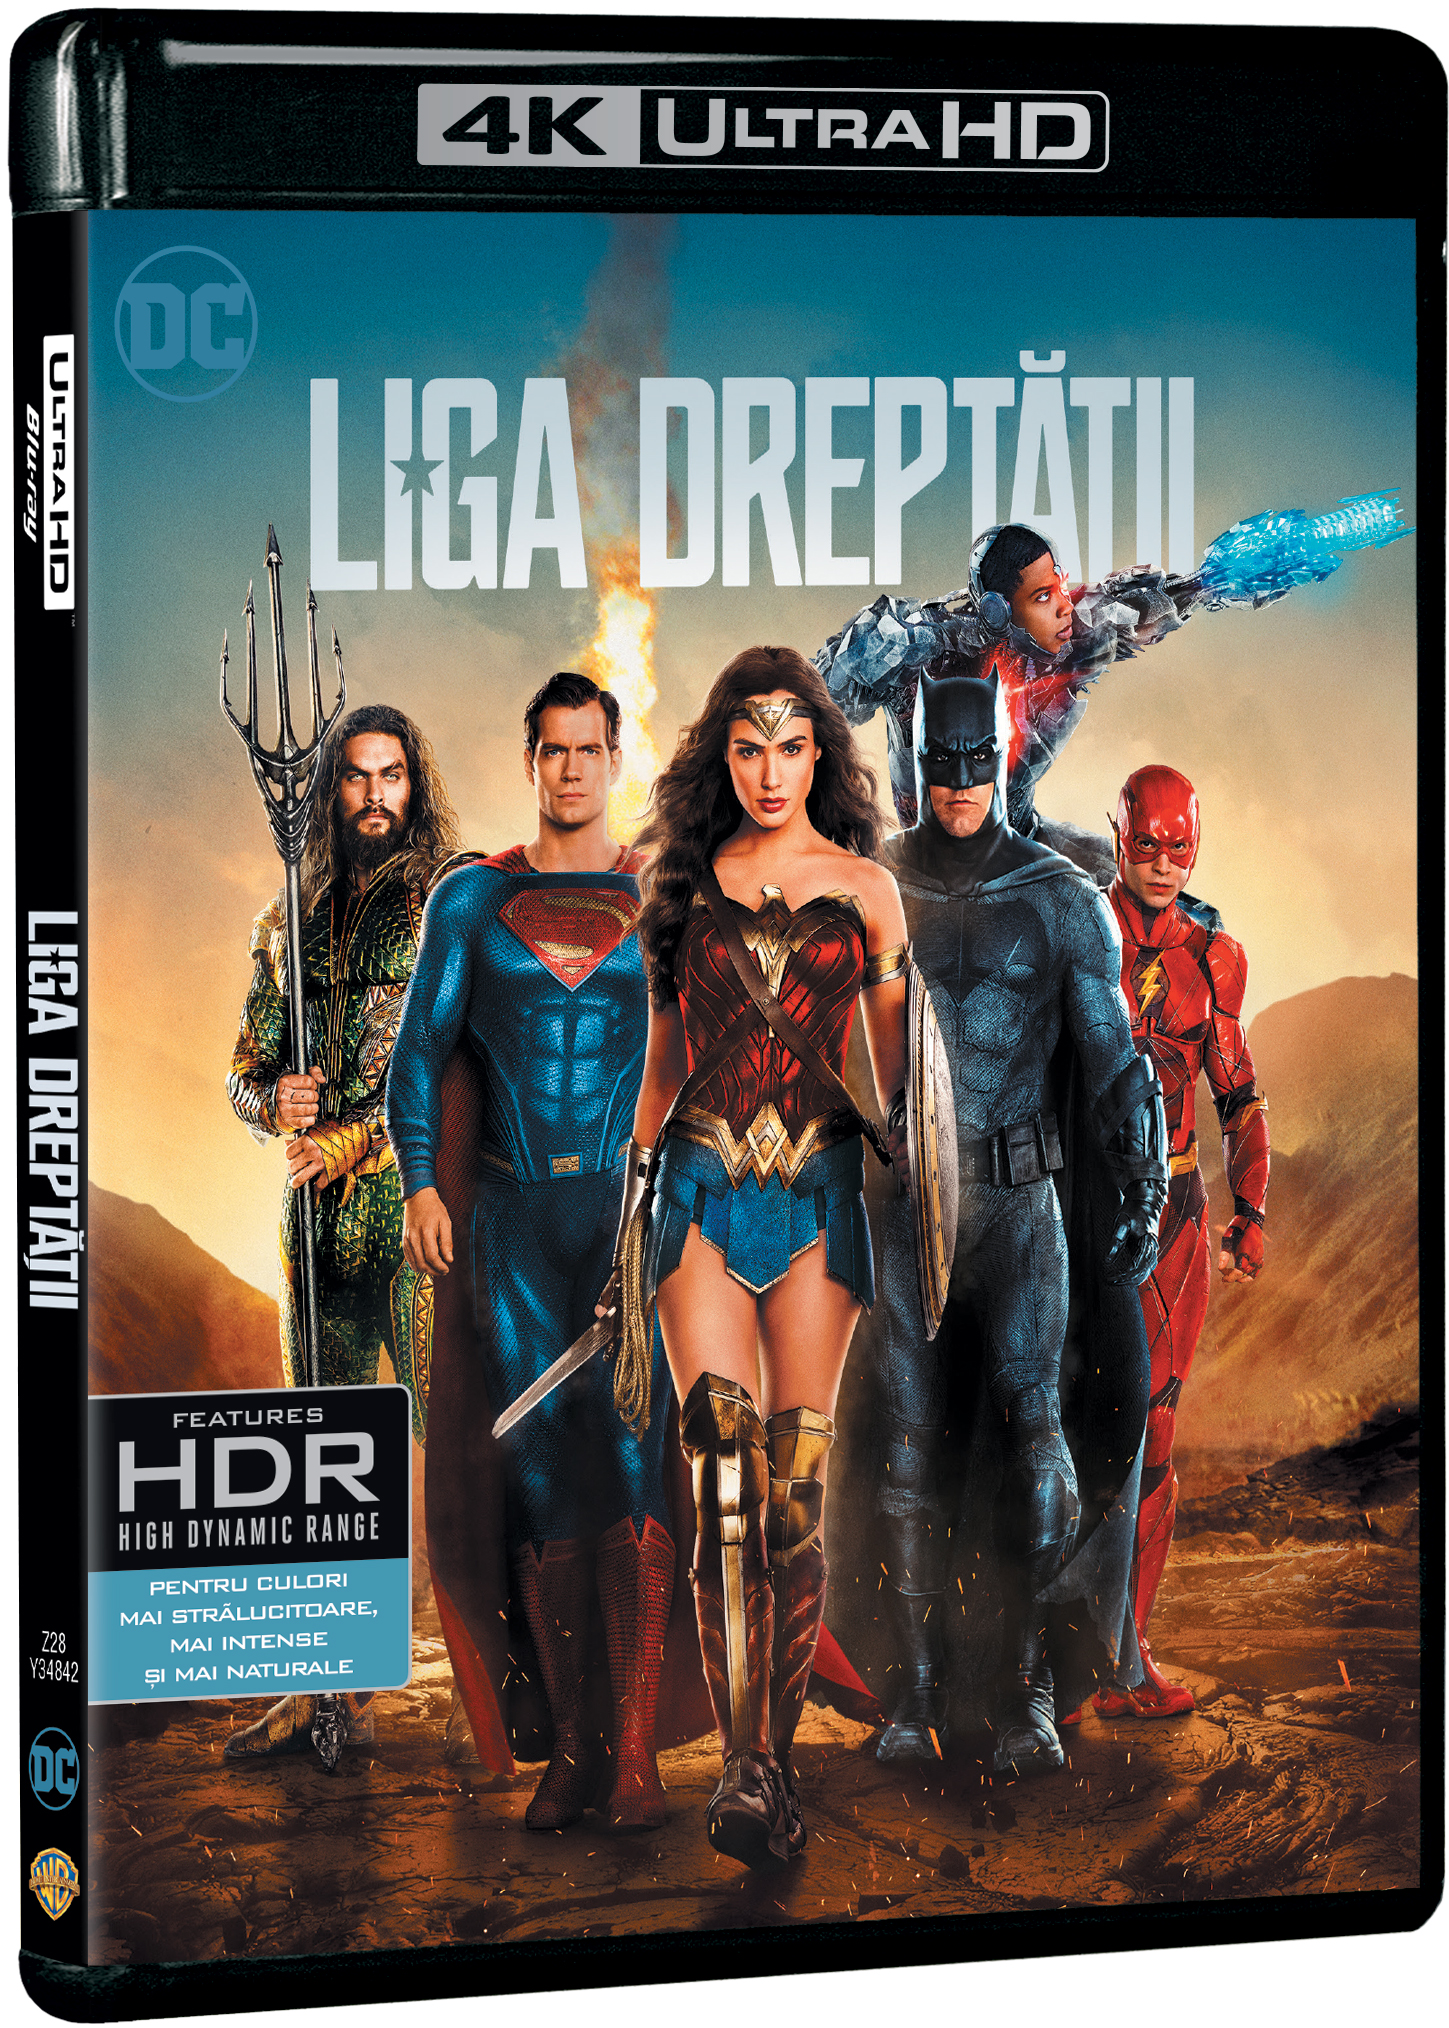 Arbitrage Decode Grounds Liga dreptatii 4K UHD (Blu Ray Disc) / Justice League - Zack Snyder